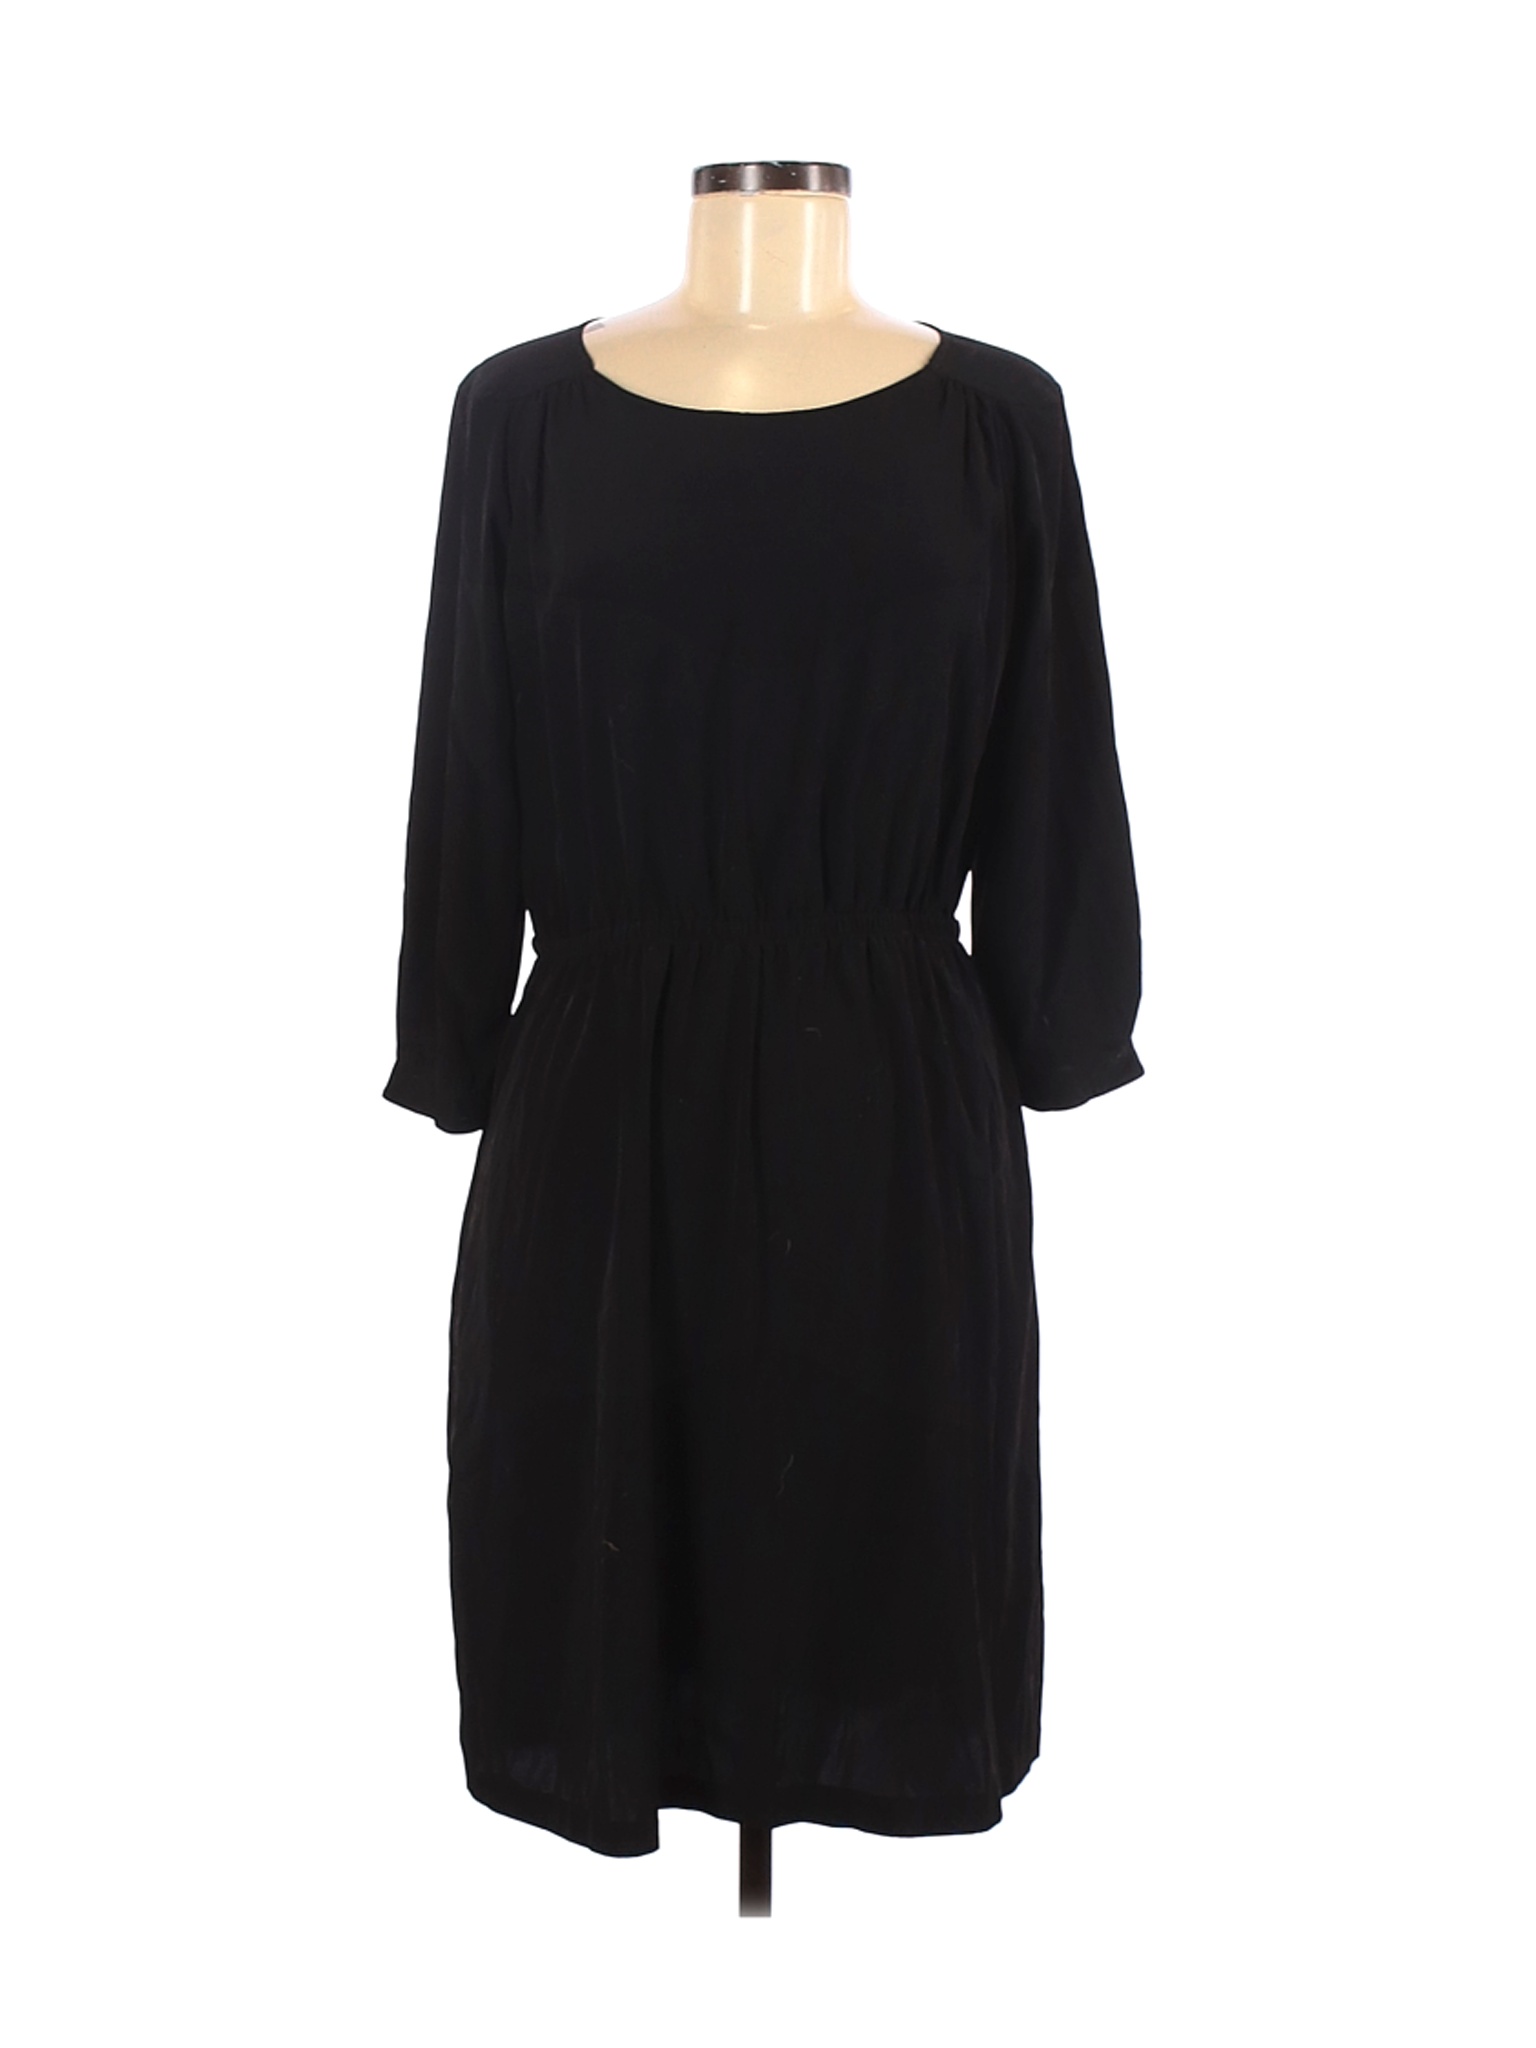 Gap Women Black Casual Dress M | eBay